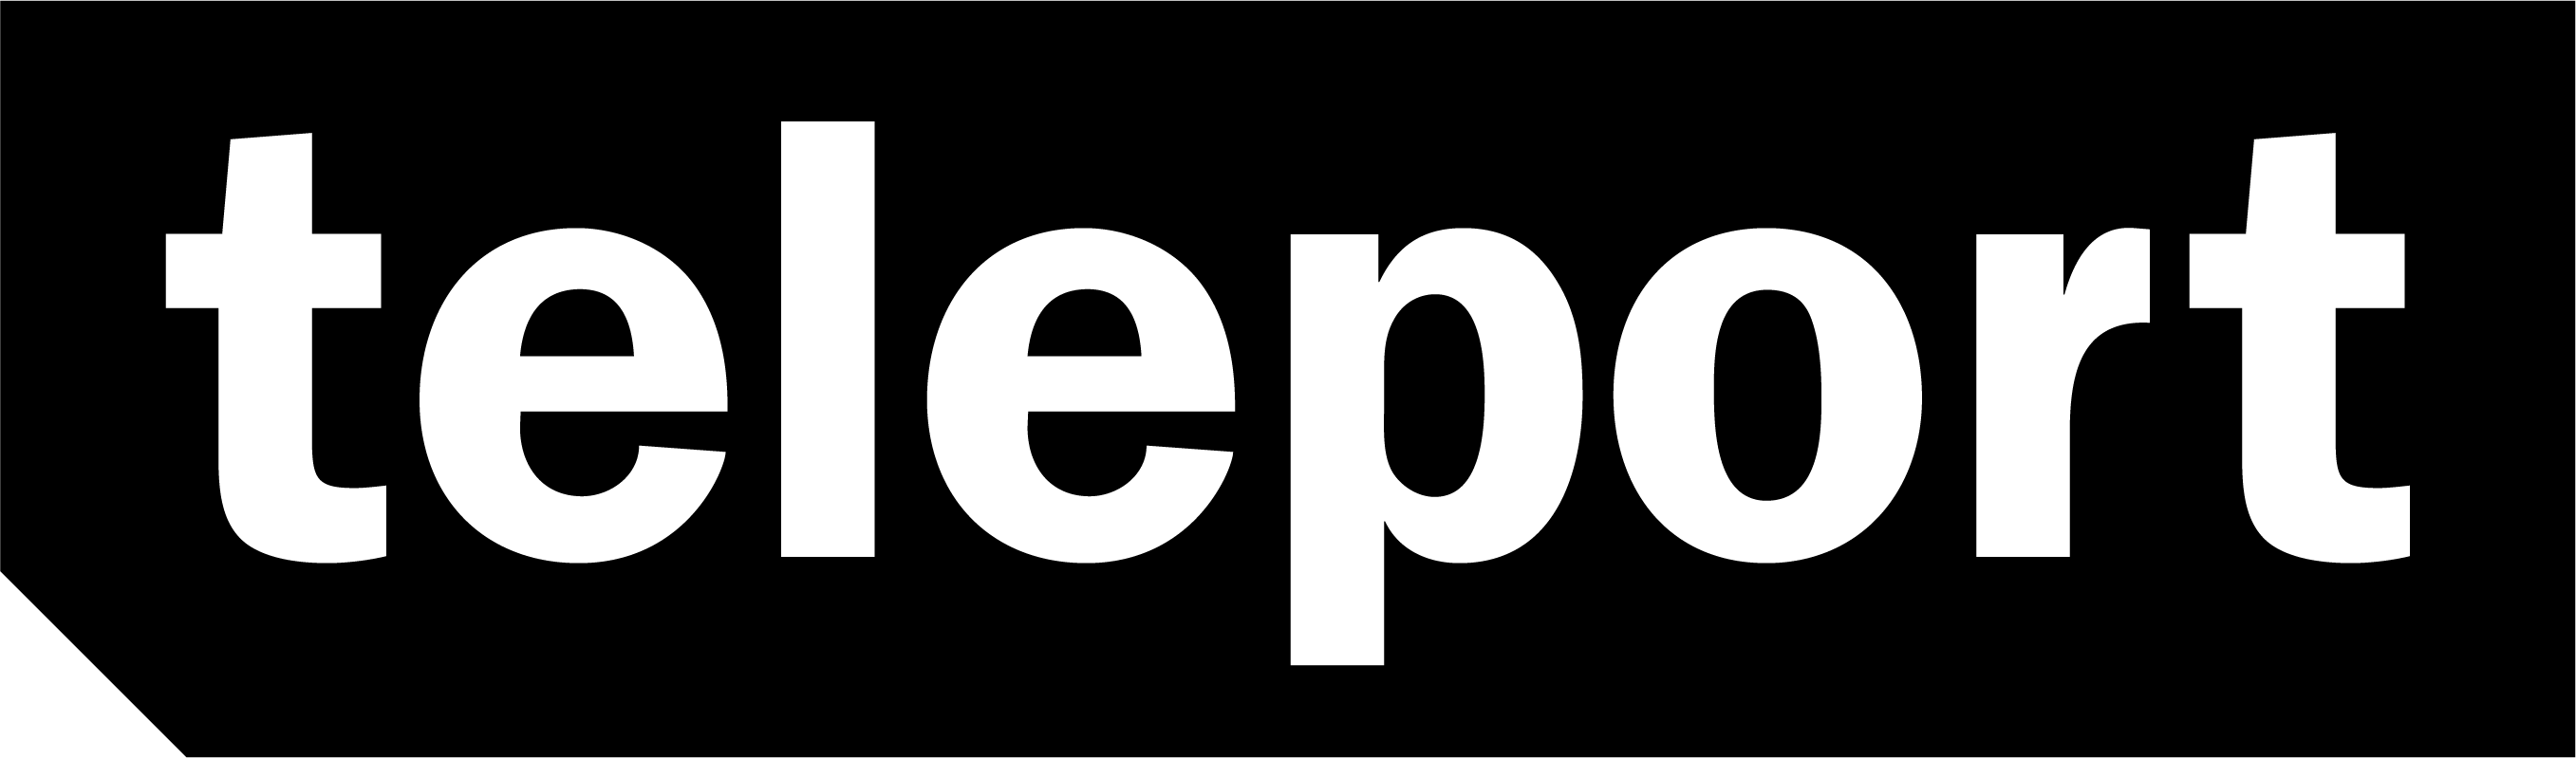 1-Teleport Horizontal Logo